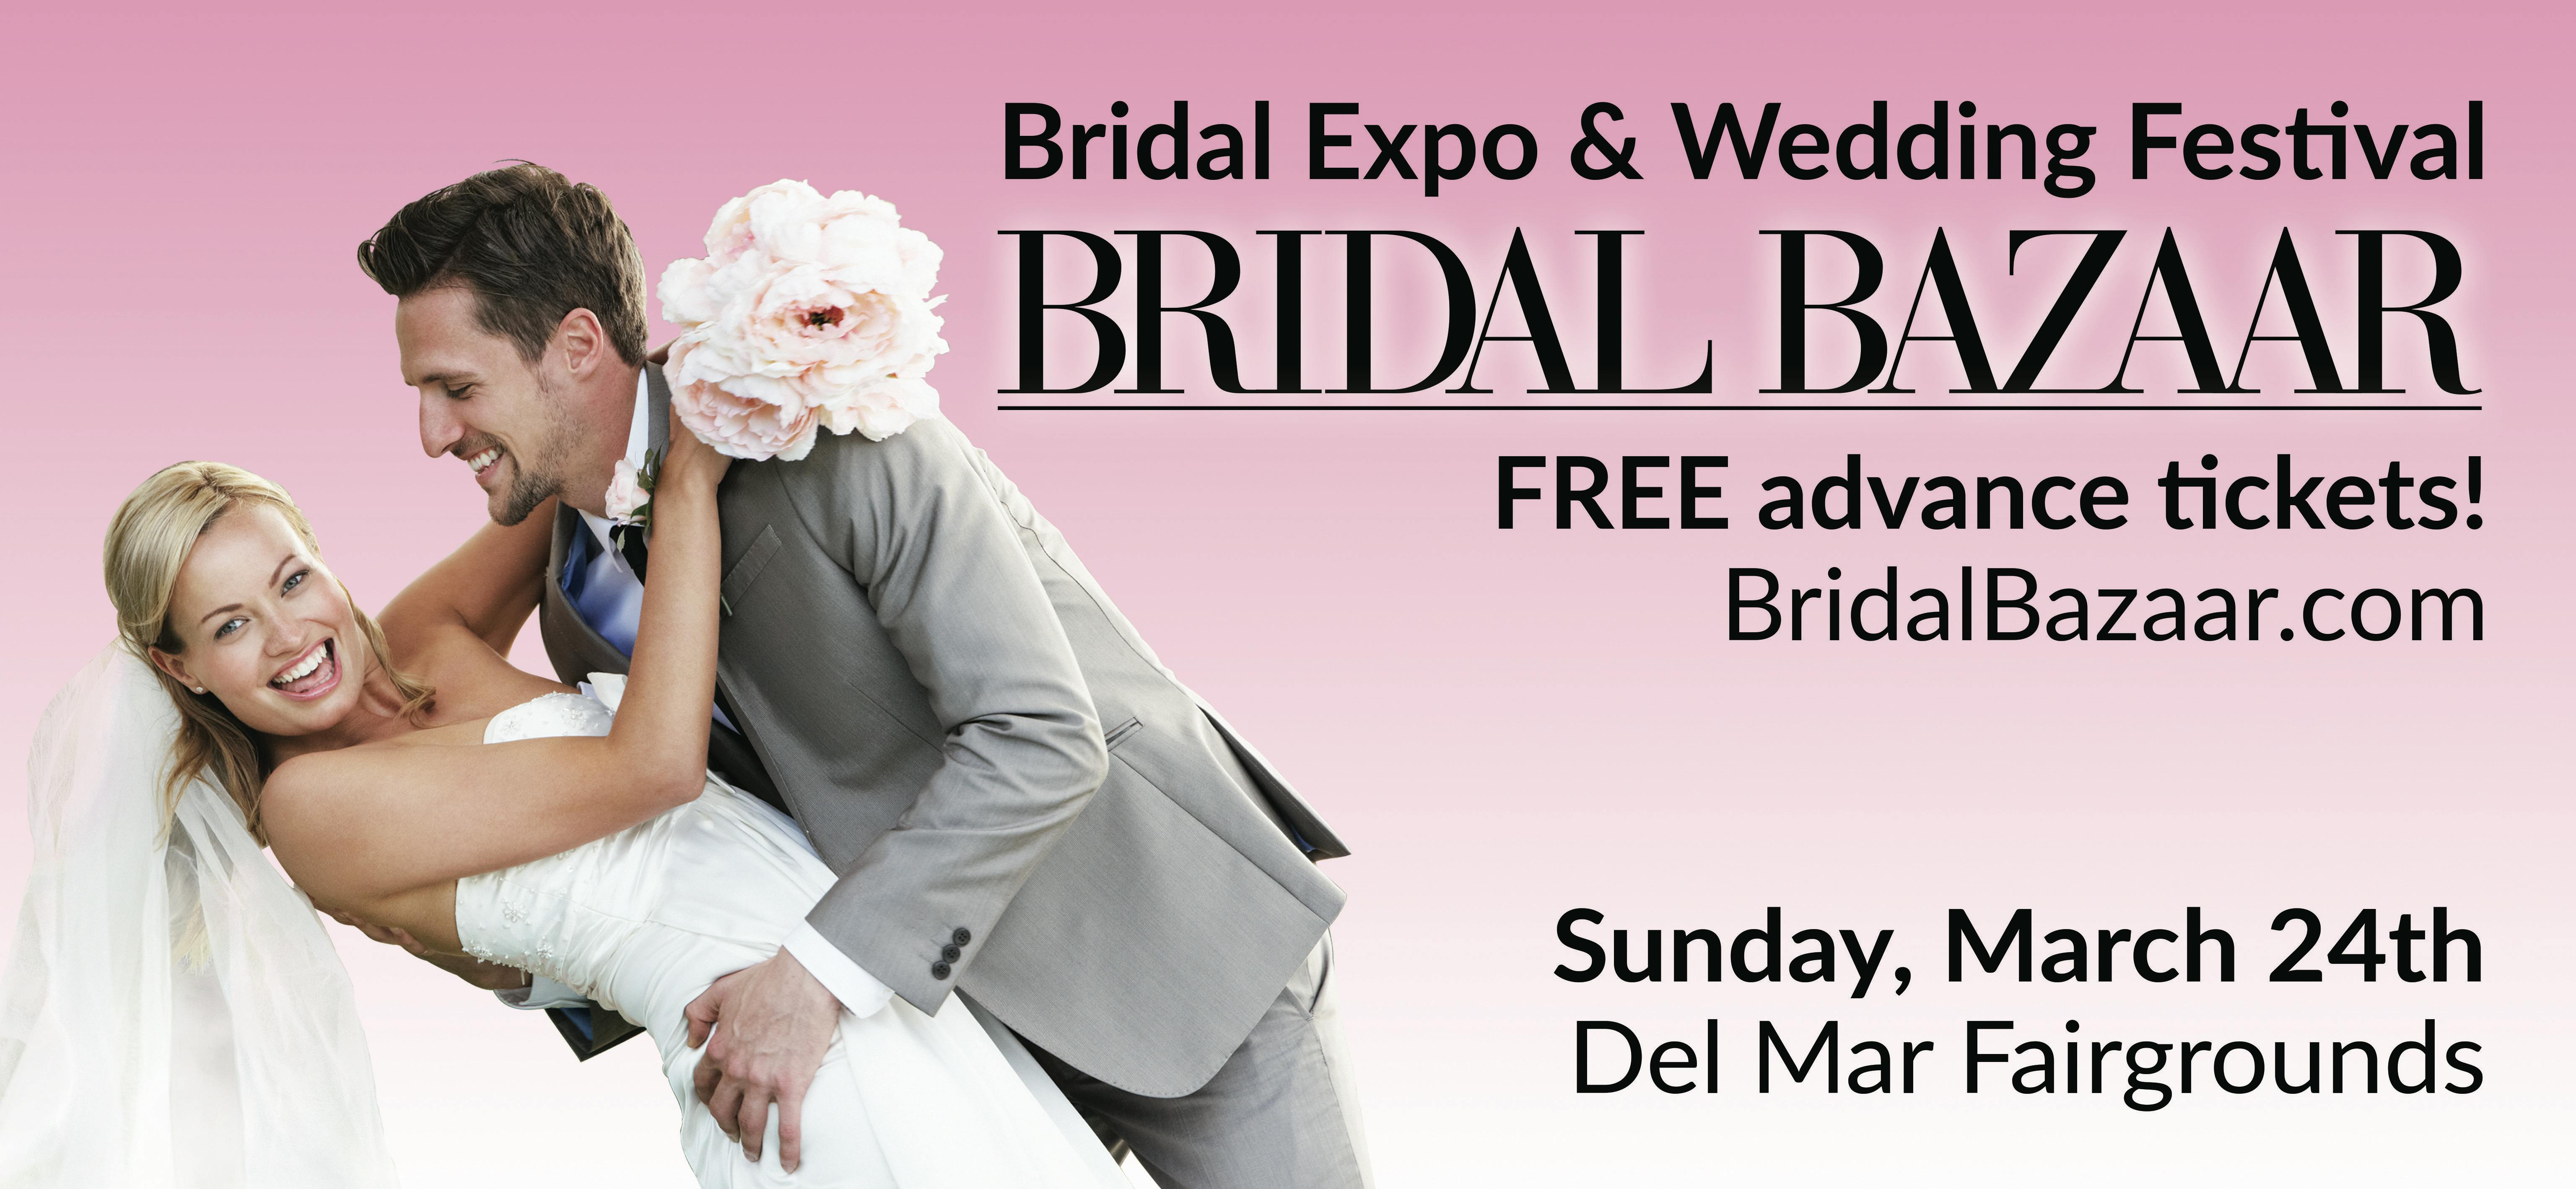 Bridal Bazaar - Bridal Expo & Wedding Festival - March 24th 2019